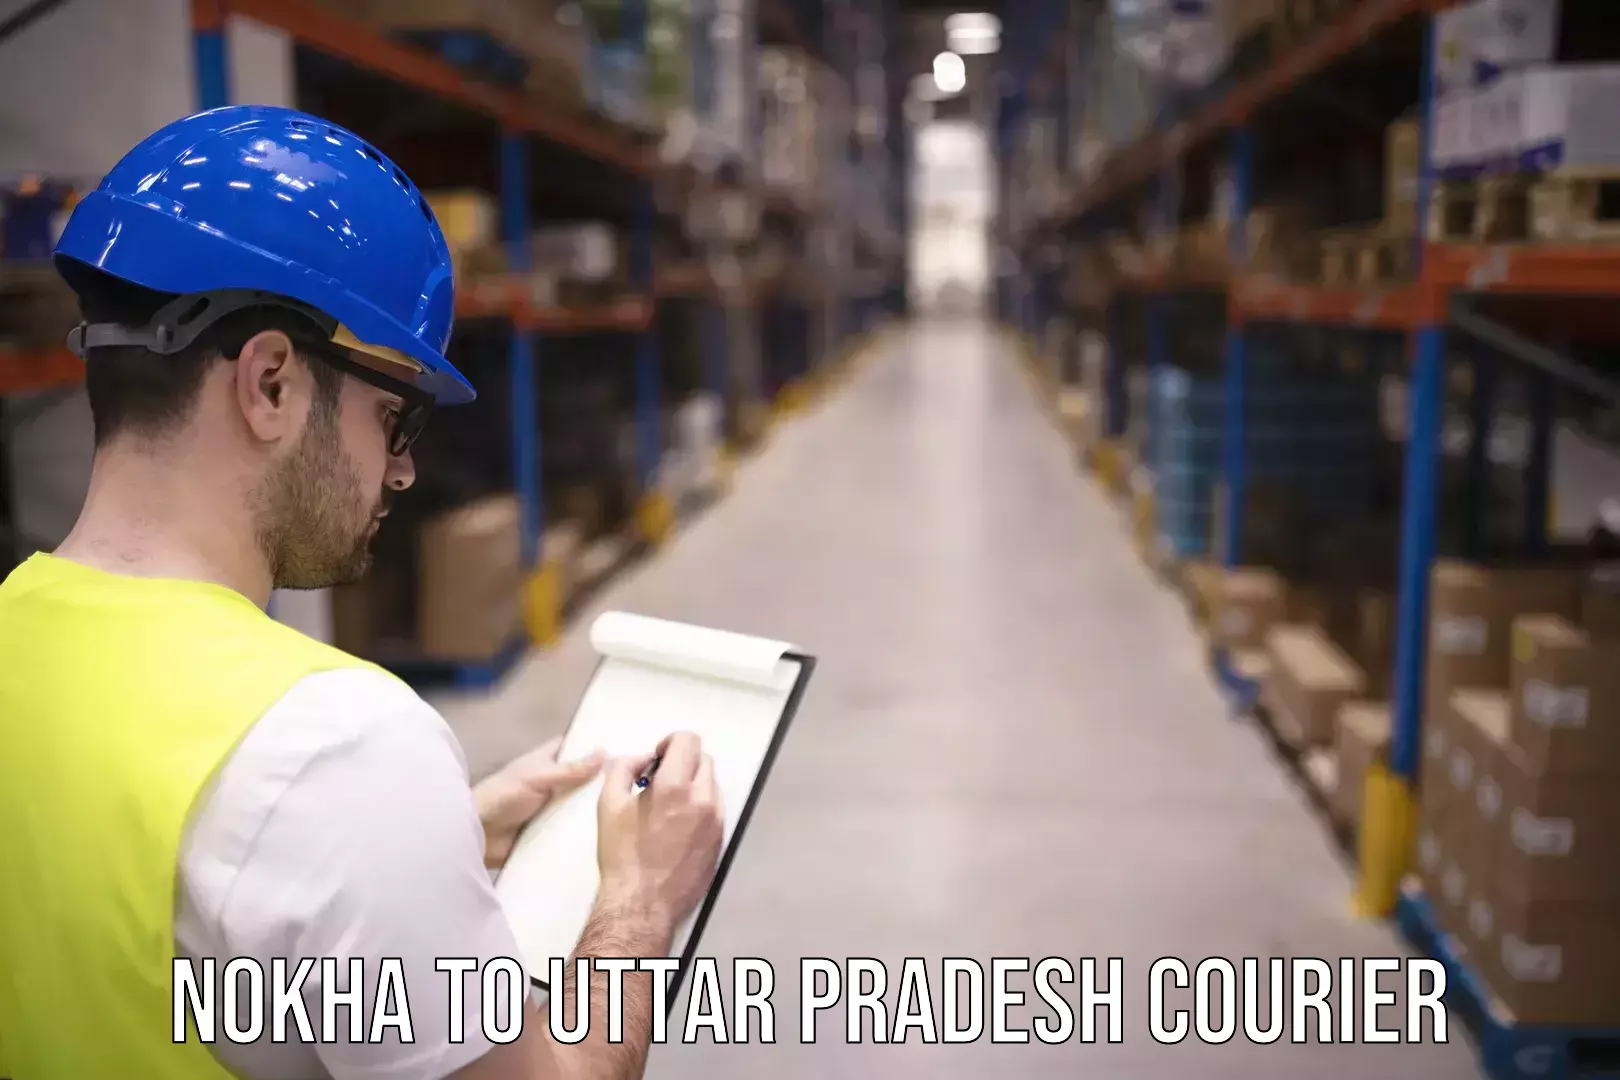 24/7 courier service Nokha to Uttar Pradesh